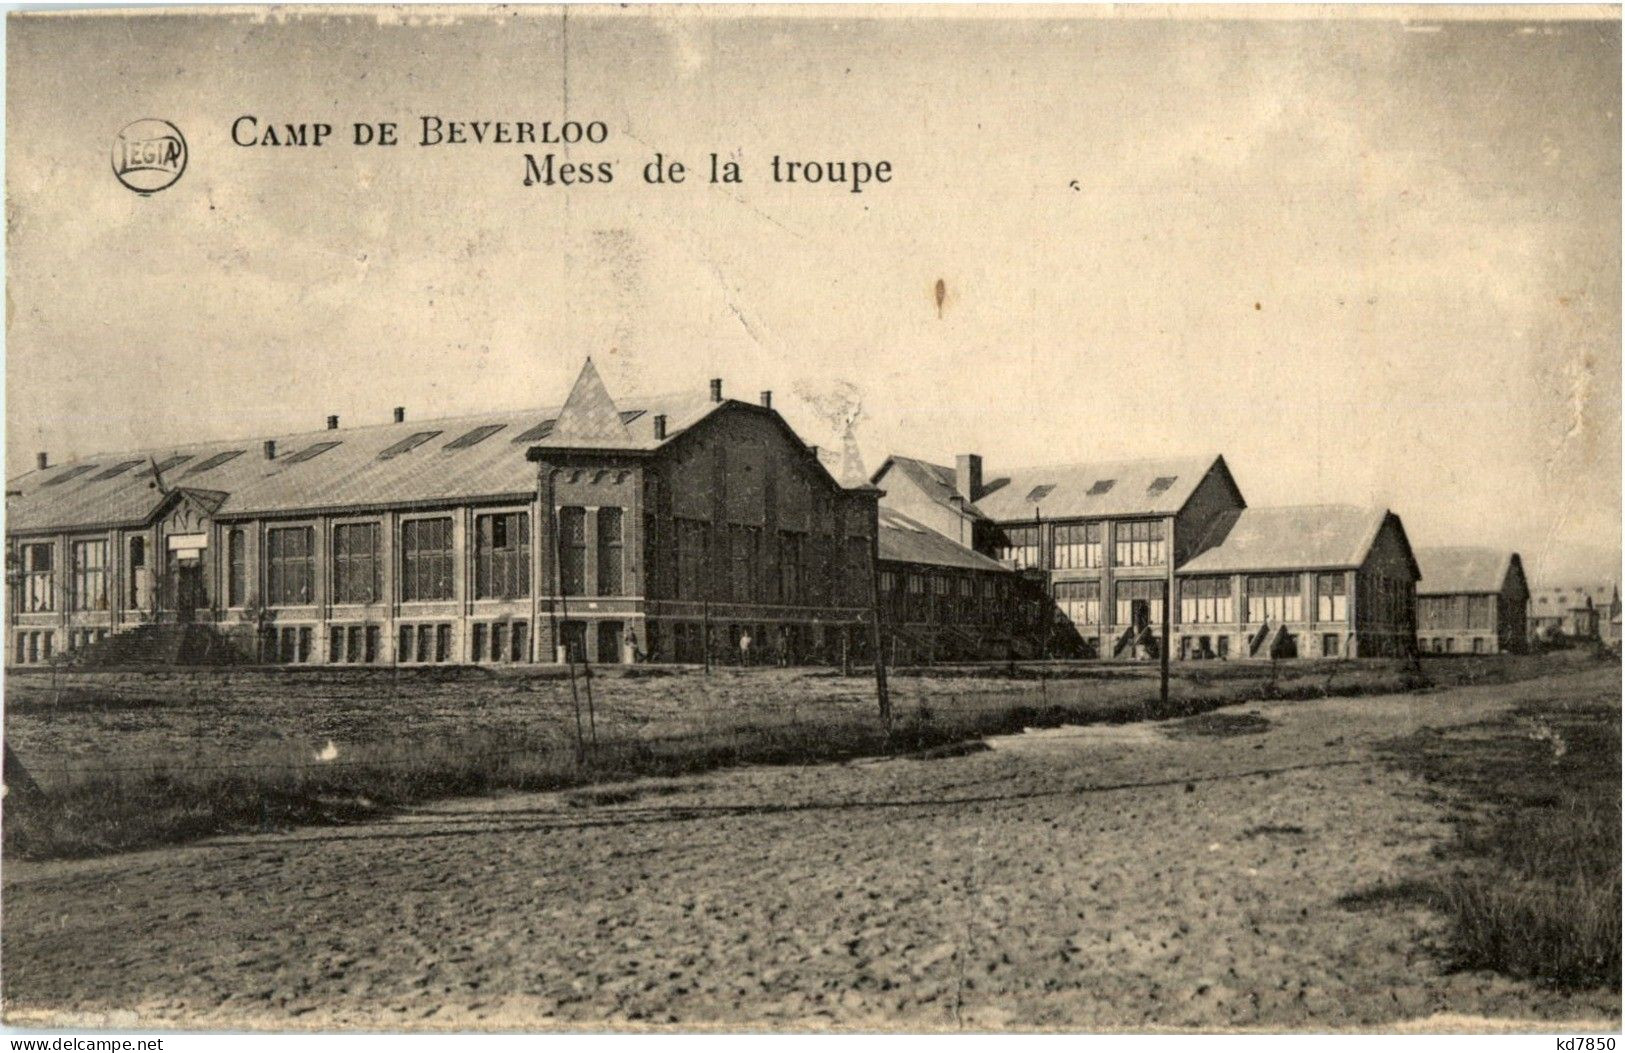 Camp De Berverloo - Mess De La Troupe - Leopoldsburg (Camp De Beverloo)